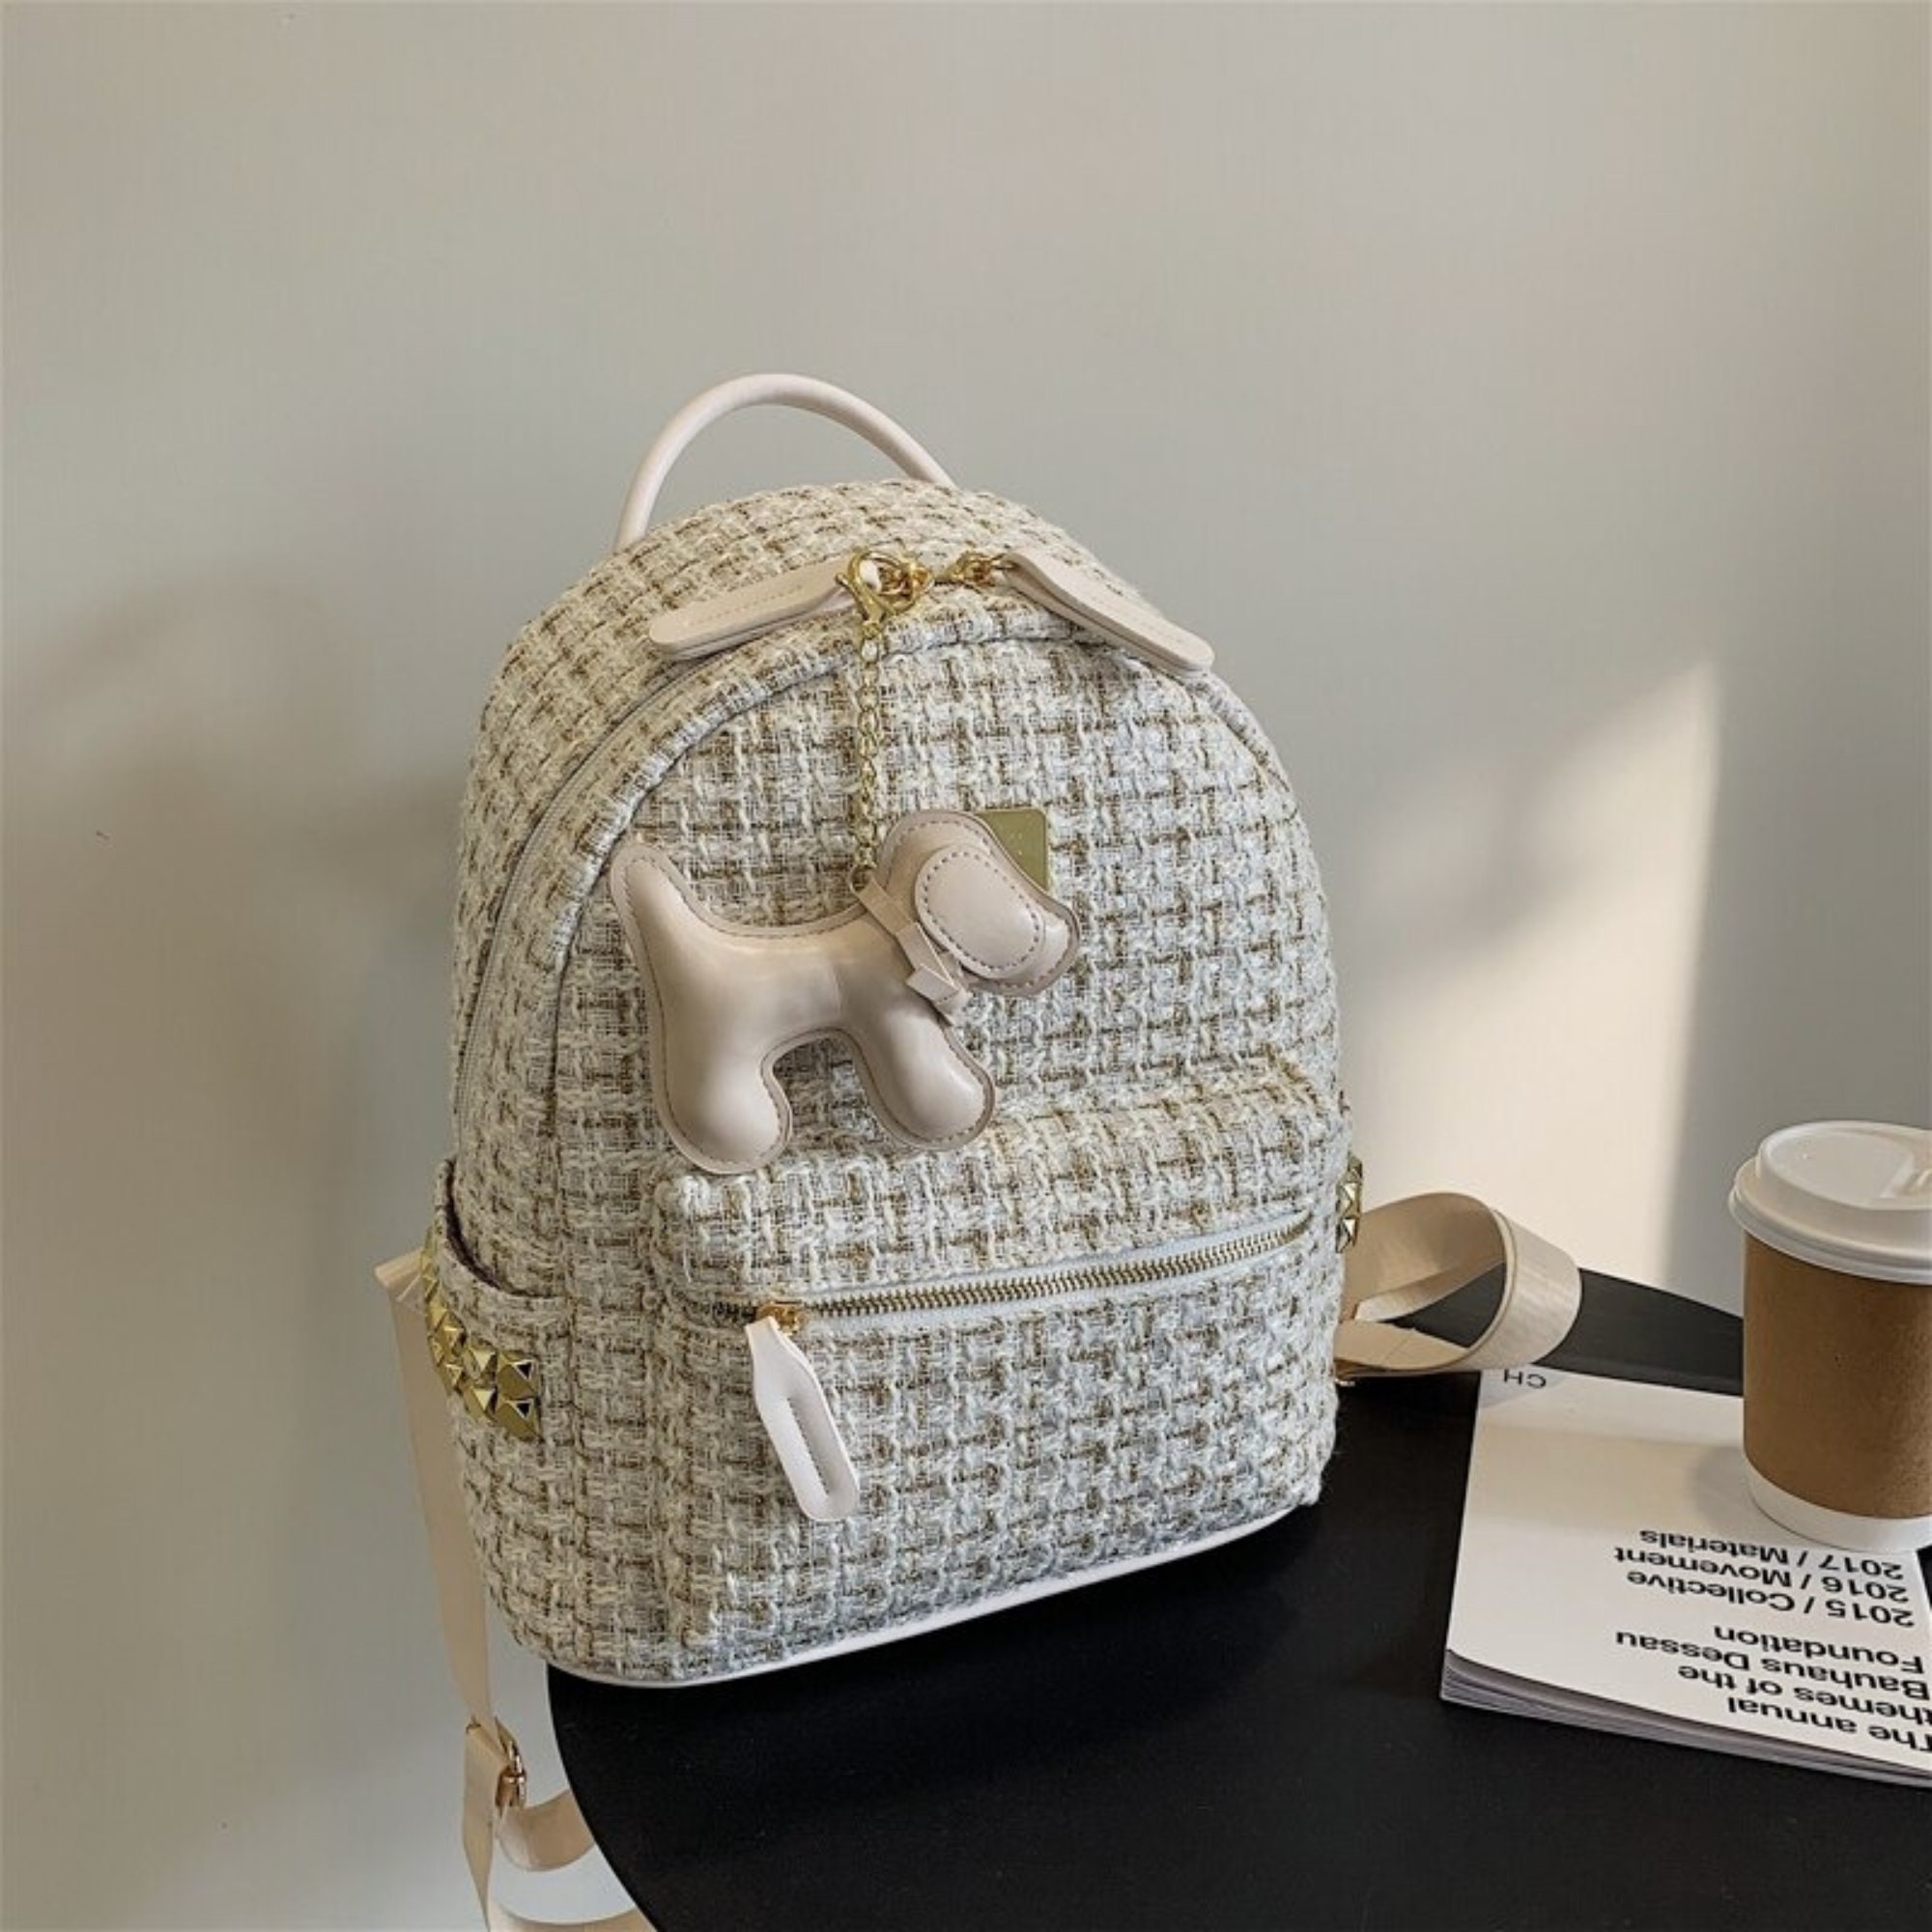 Woolen Super Cute Mini Backpack for Ladies Plaid Shoulder 